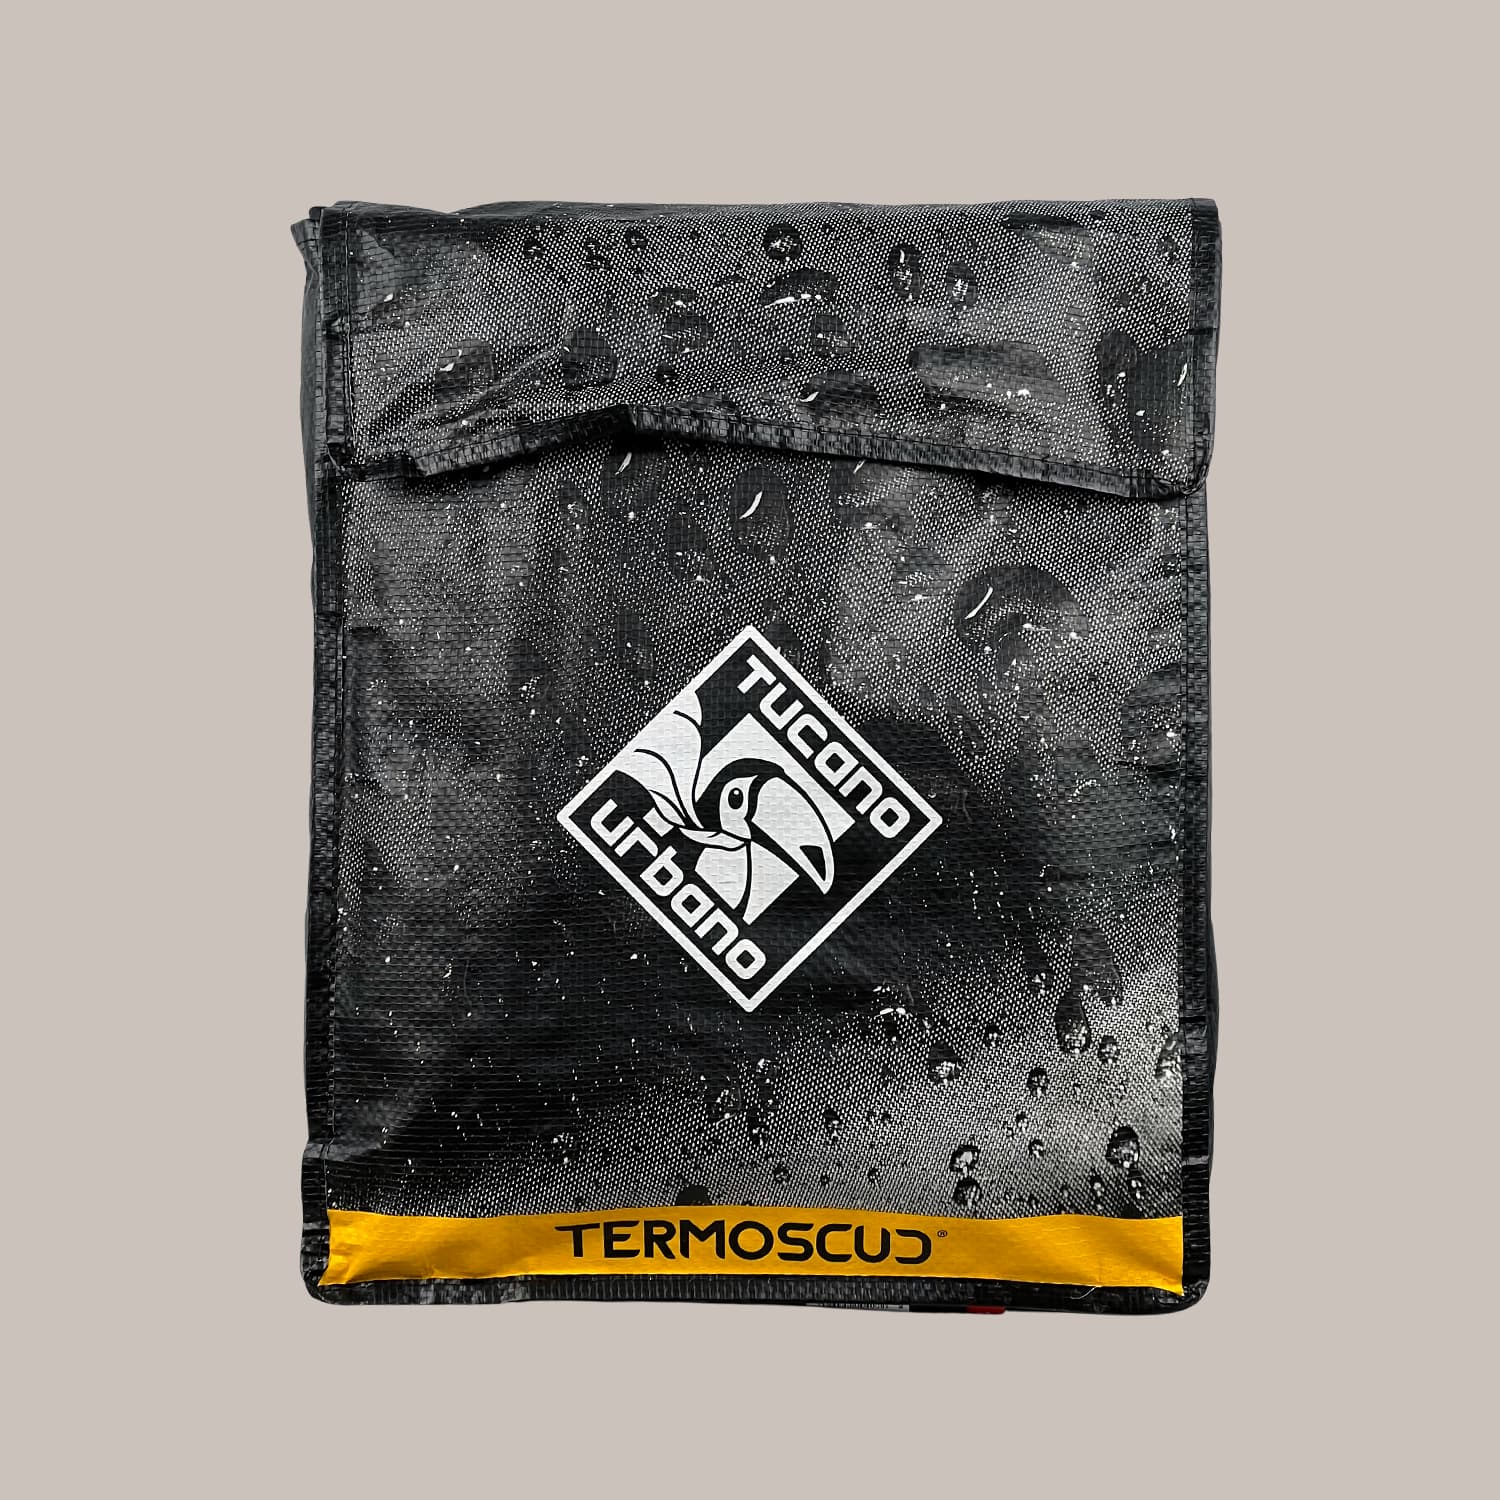 Tucano Termoscud R151x R017 R176 Pro devant